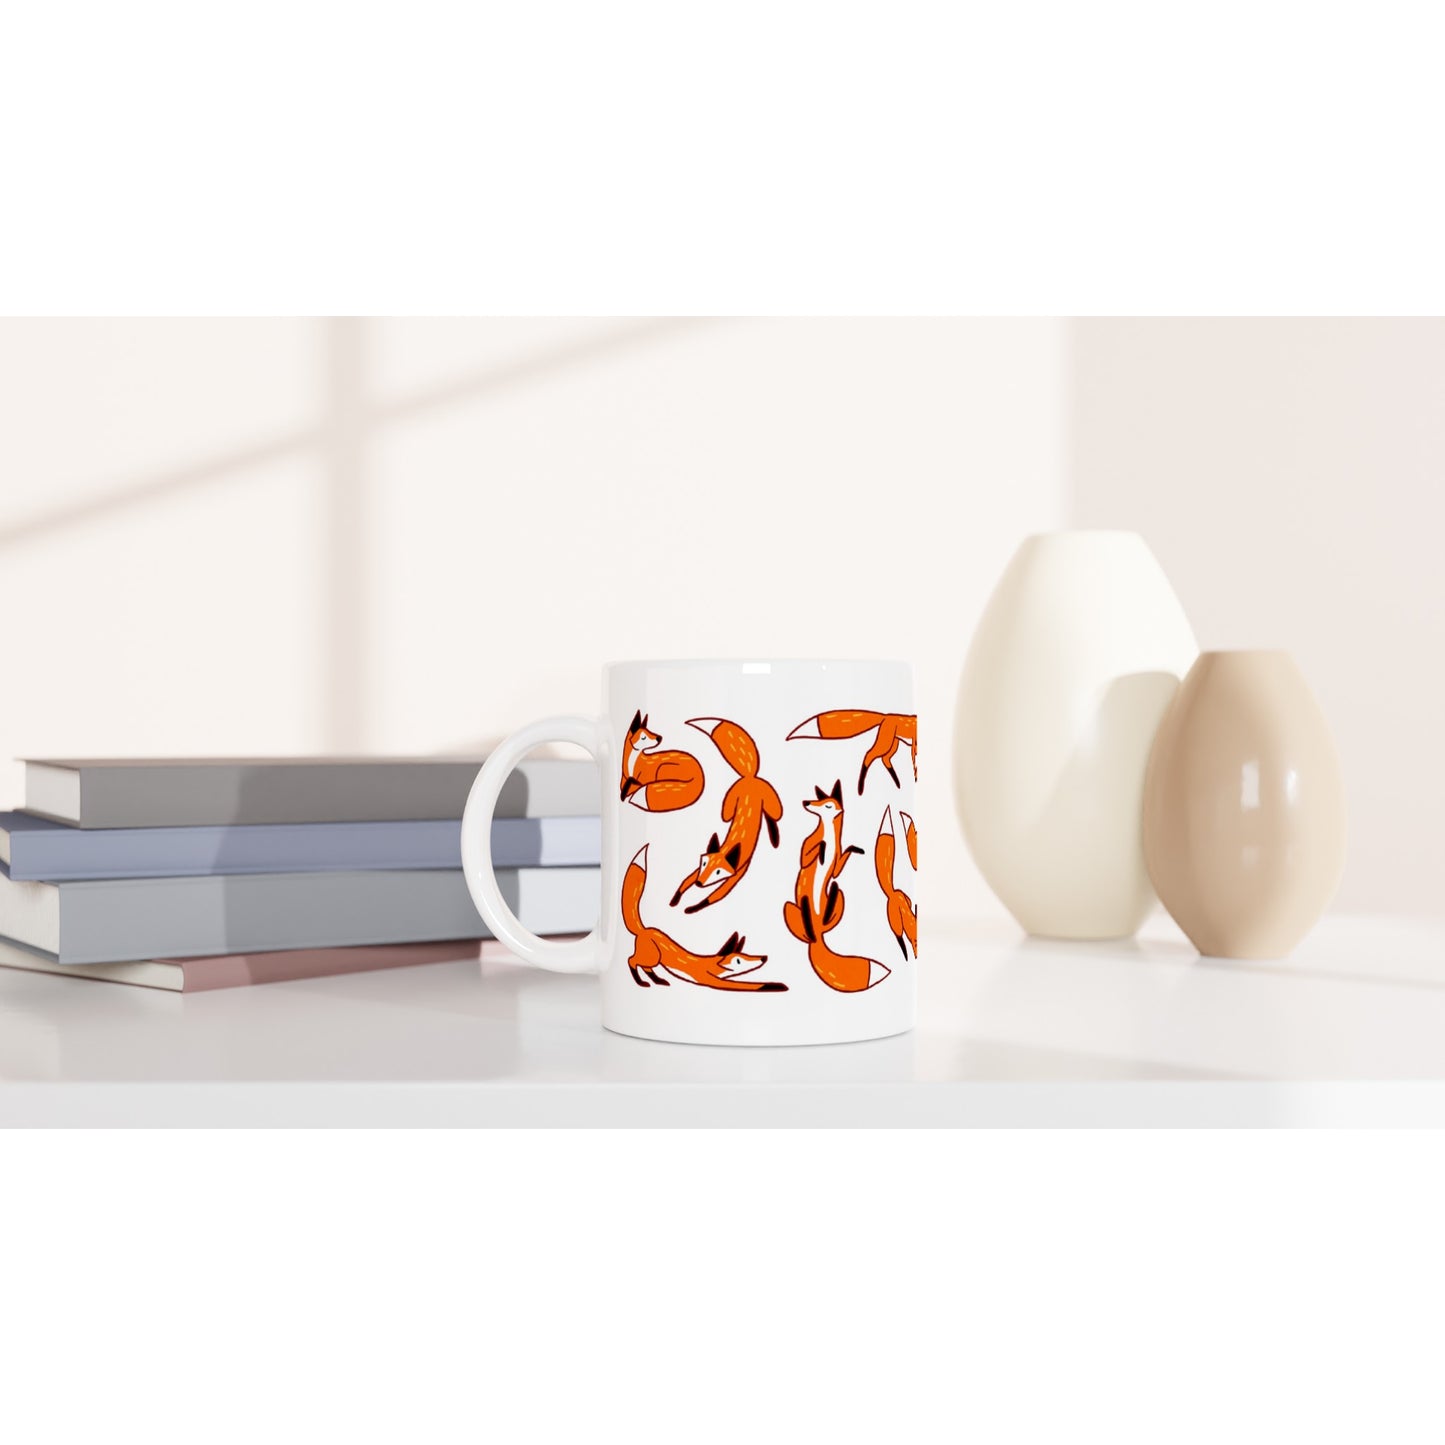 Foxes a Plenty - 11oz Ceramic Mug